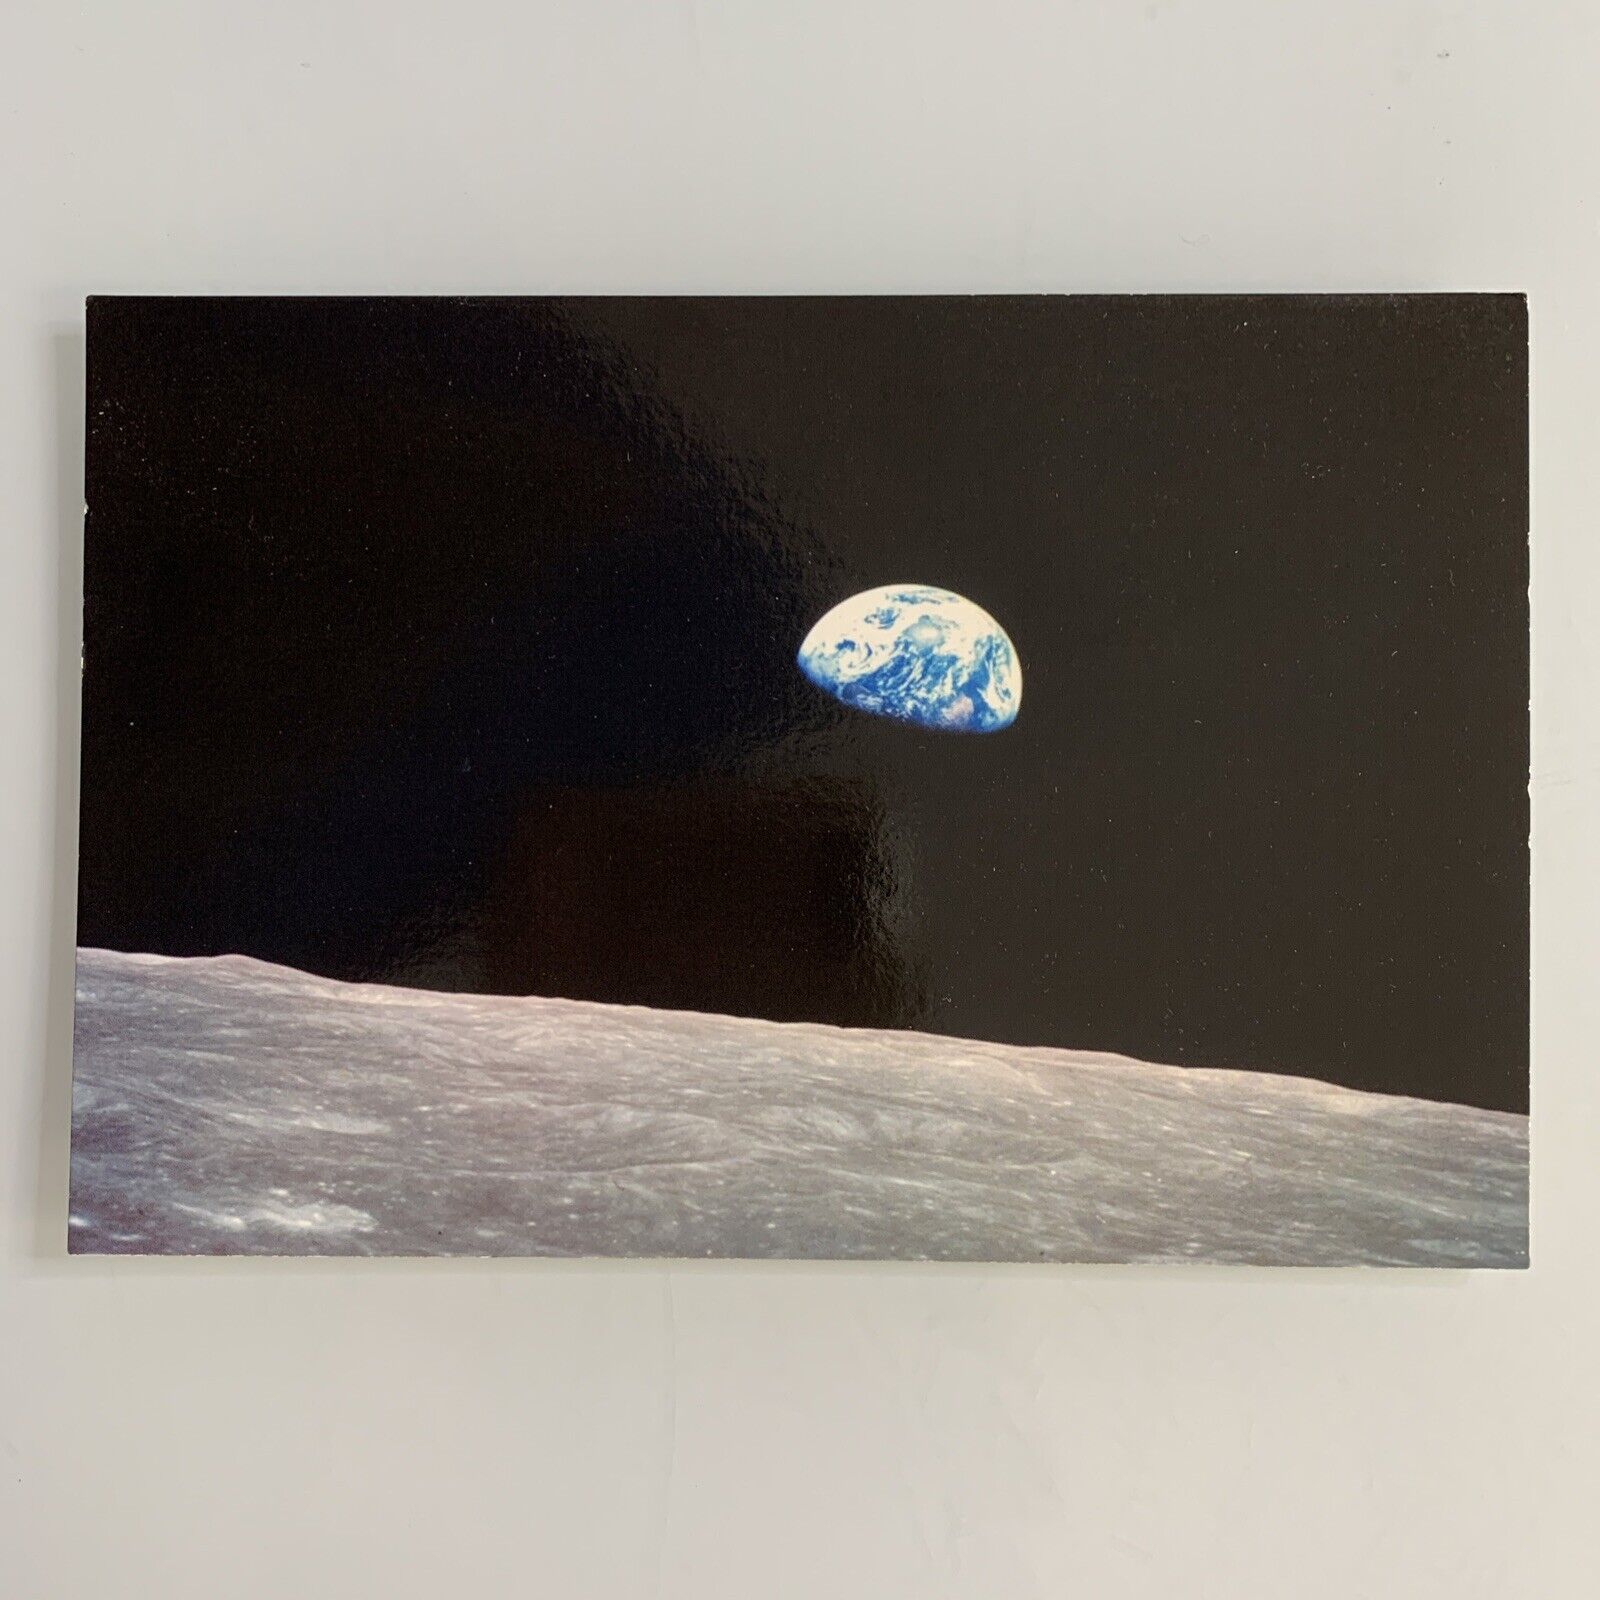 Earthrise 1968 Post Card